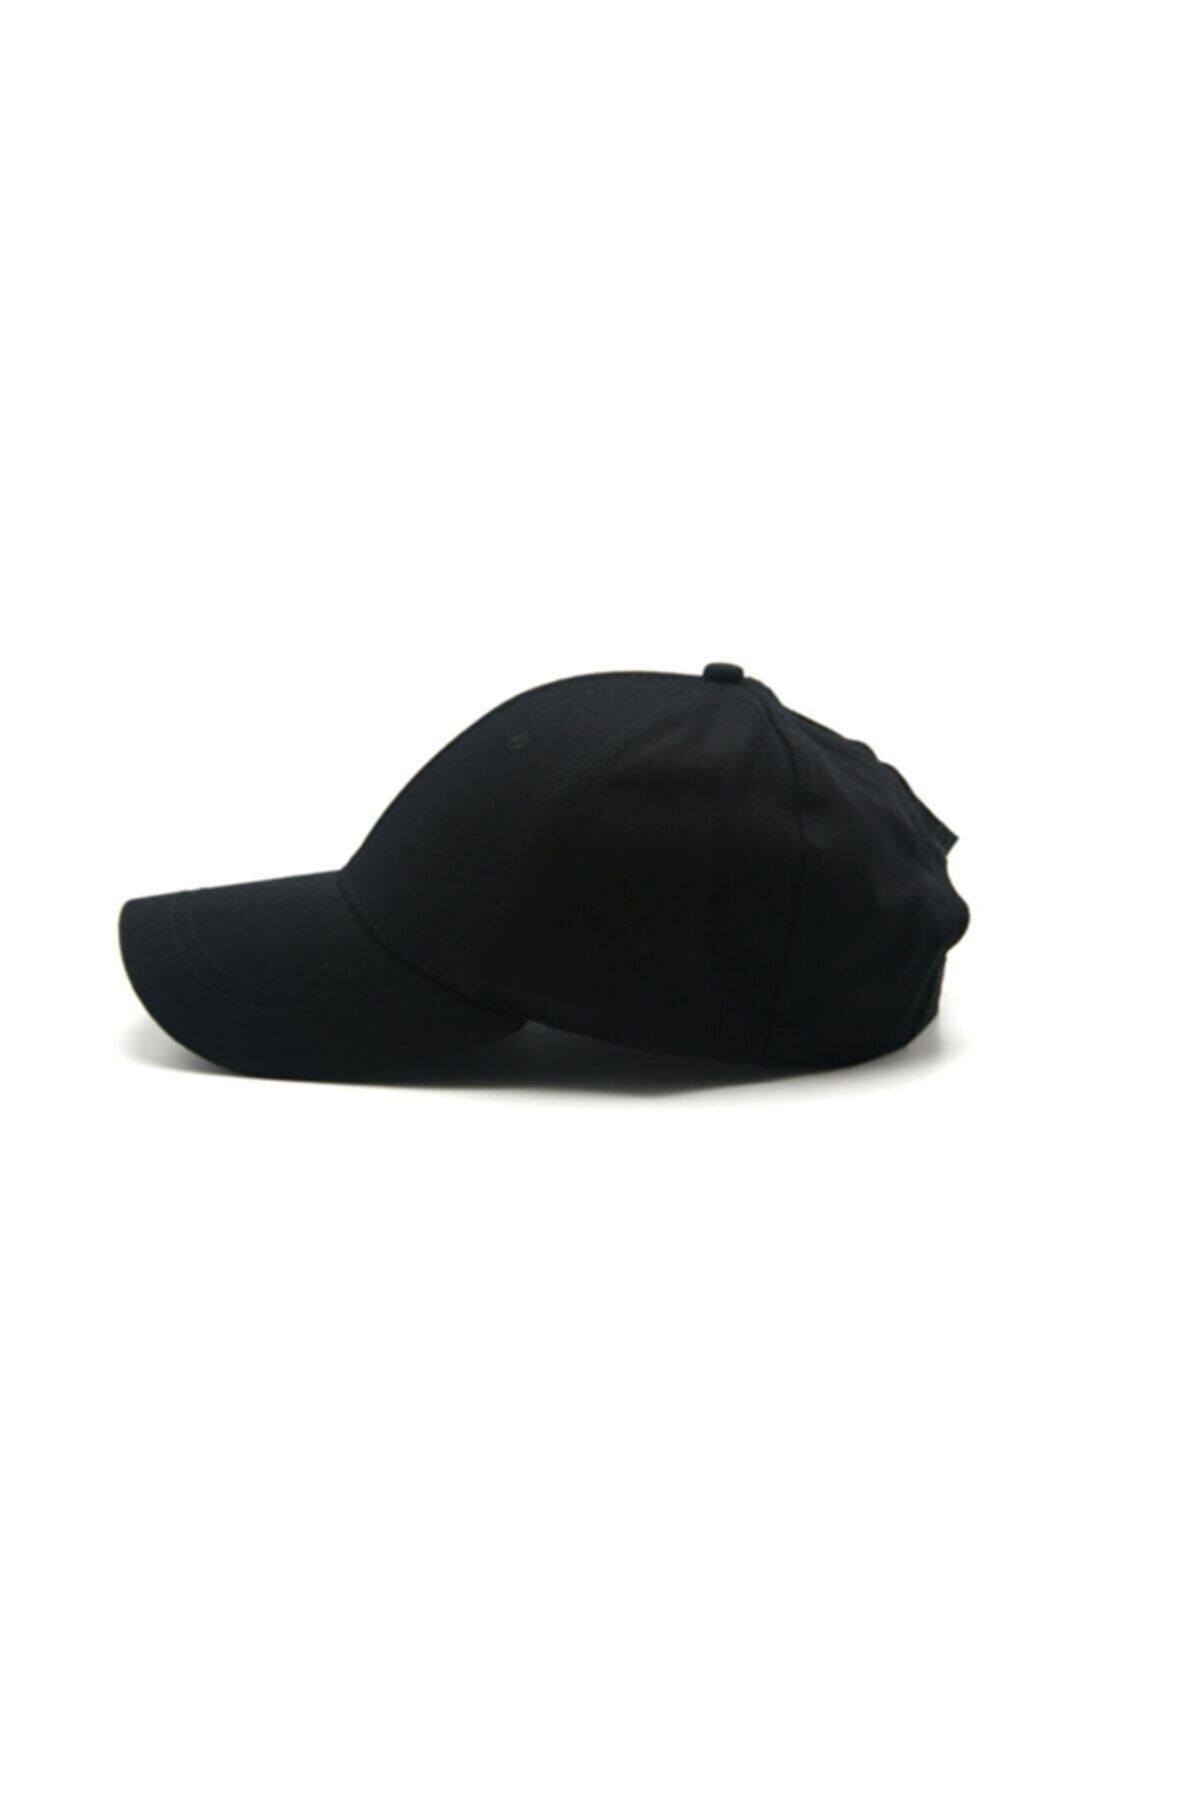 CANDEL Unısex Şapka